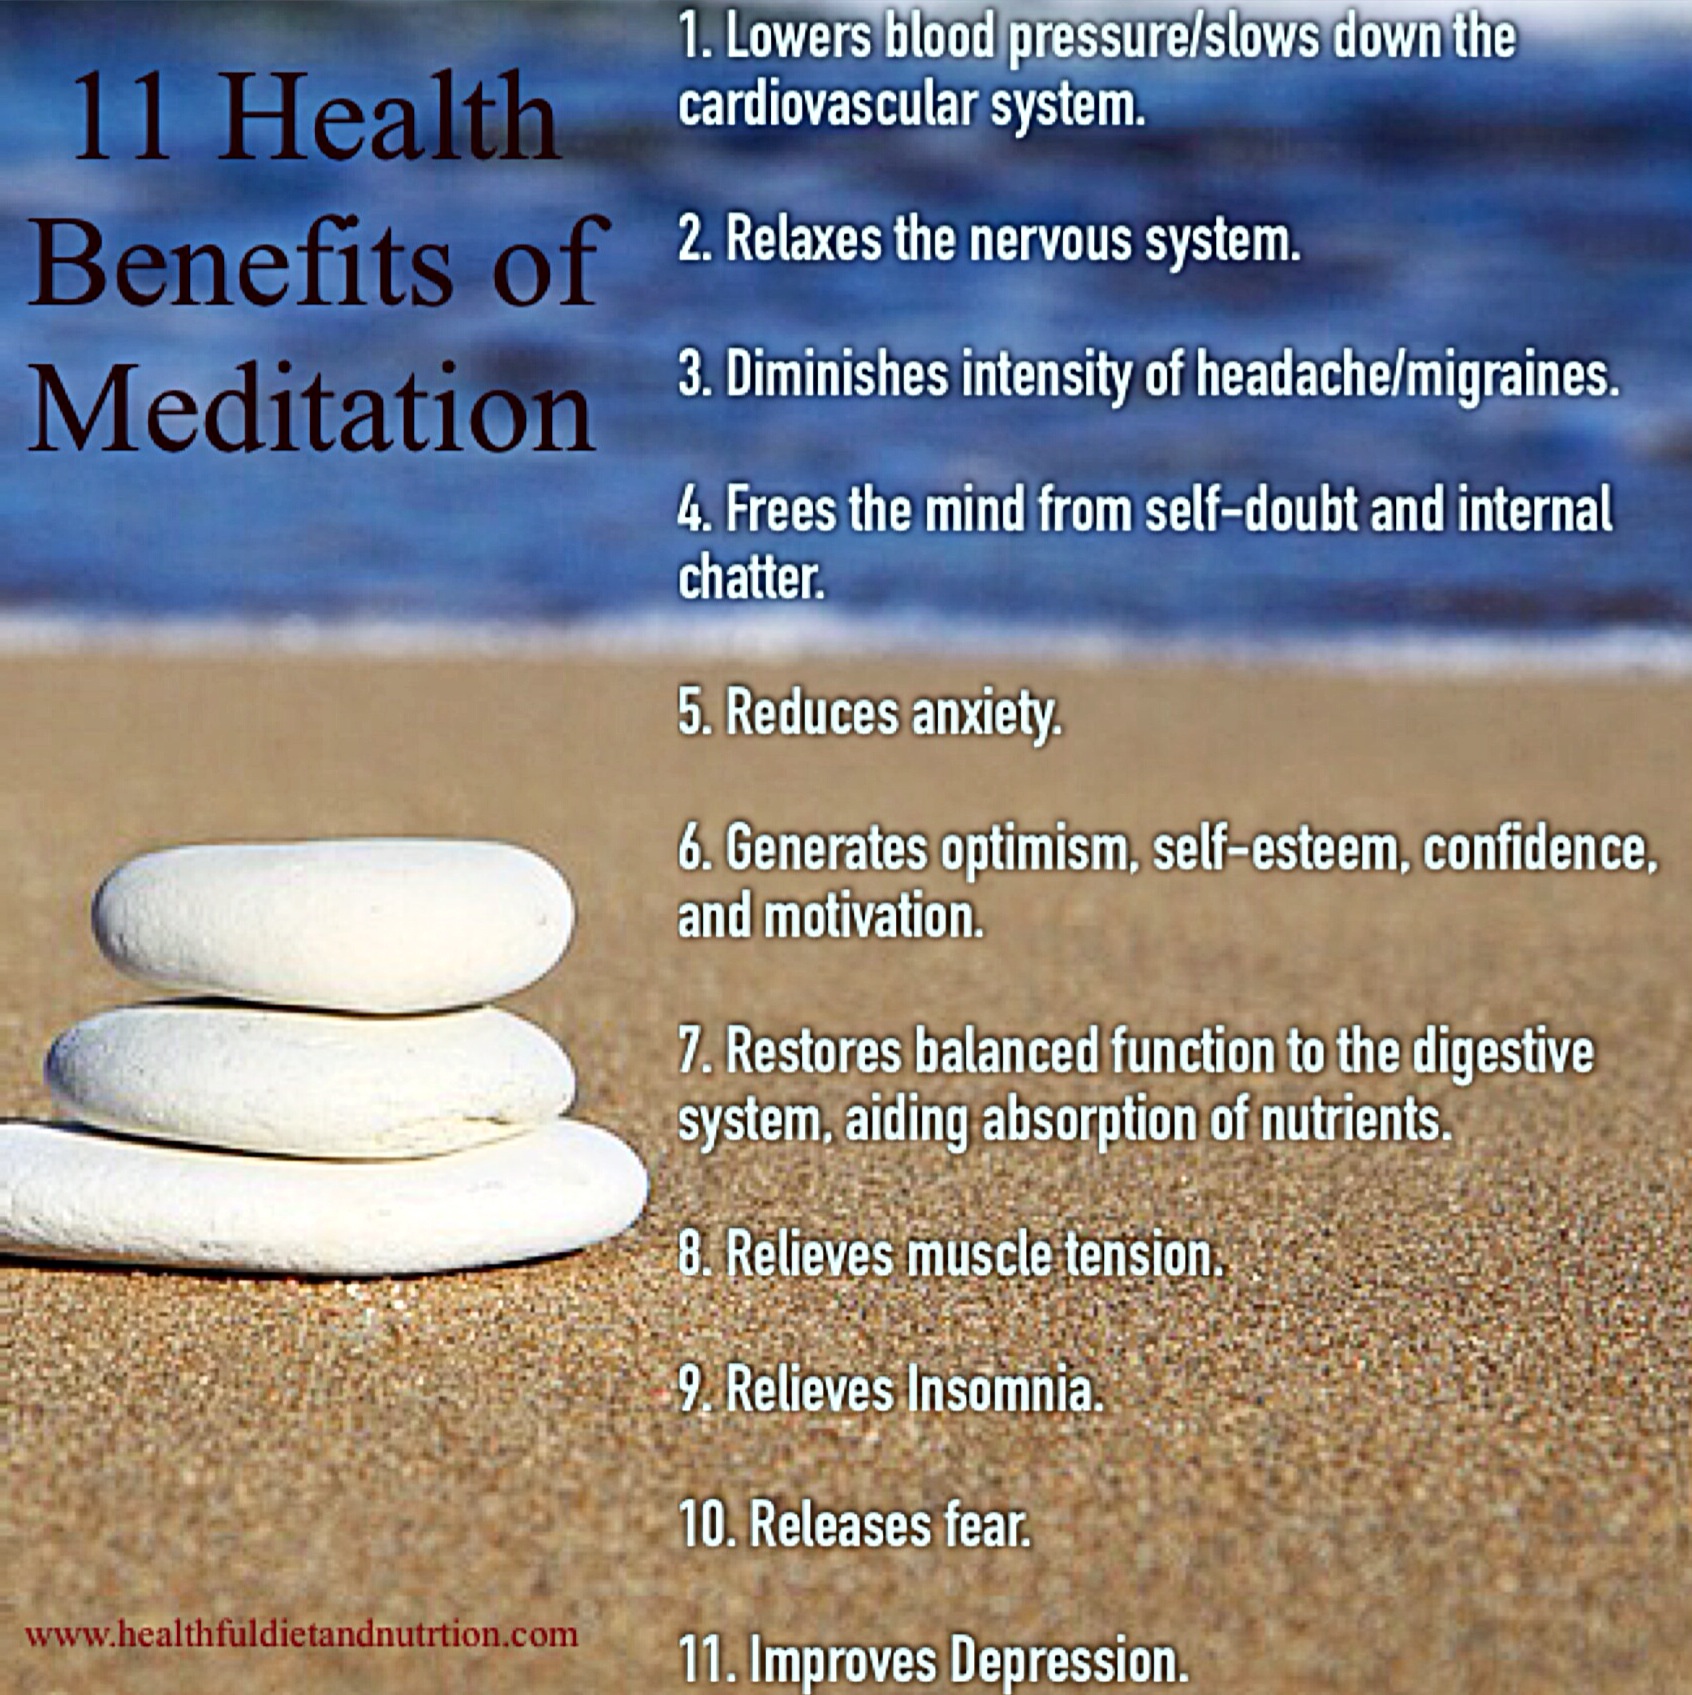 11 Health Benefits Of Meditation